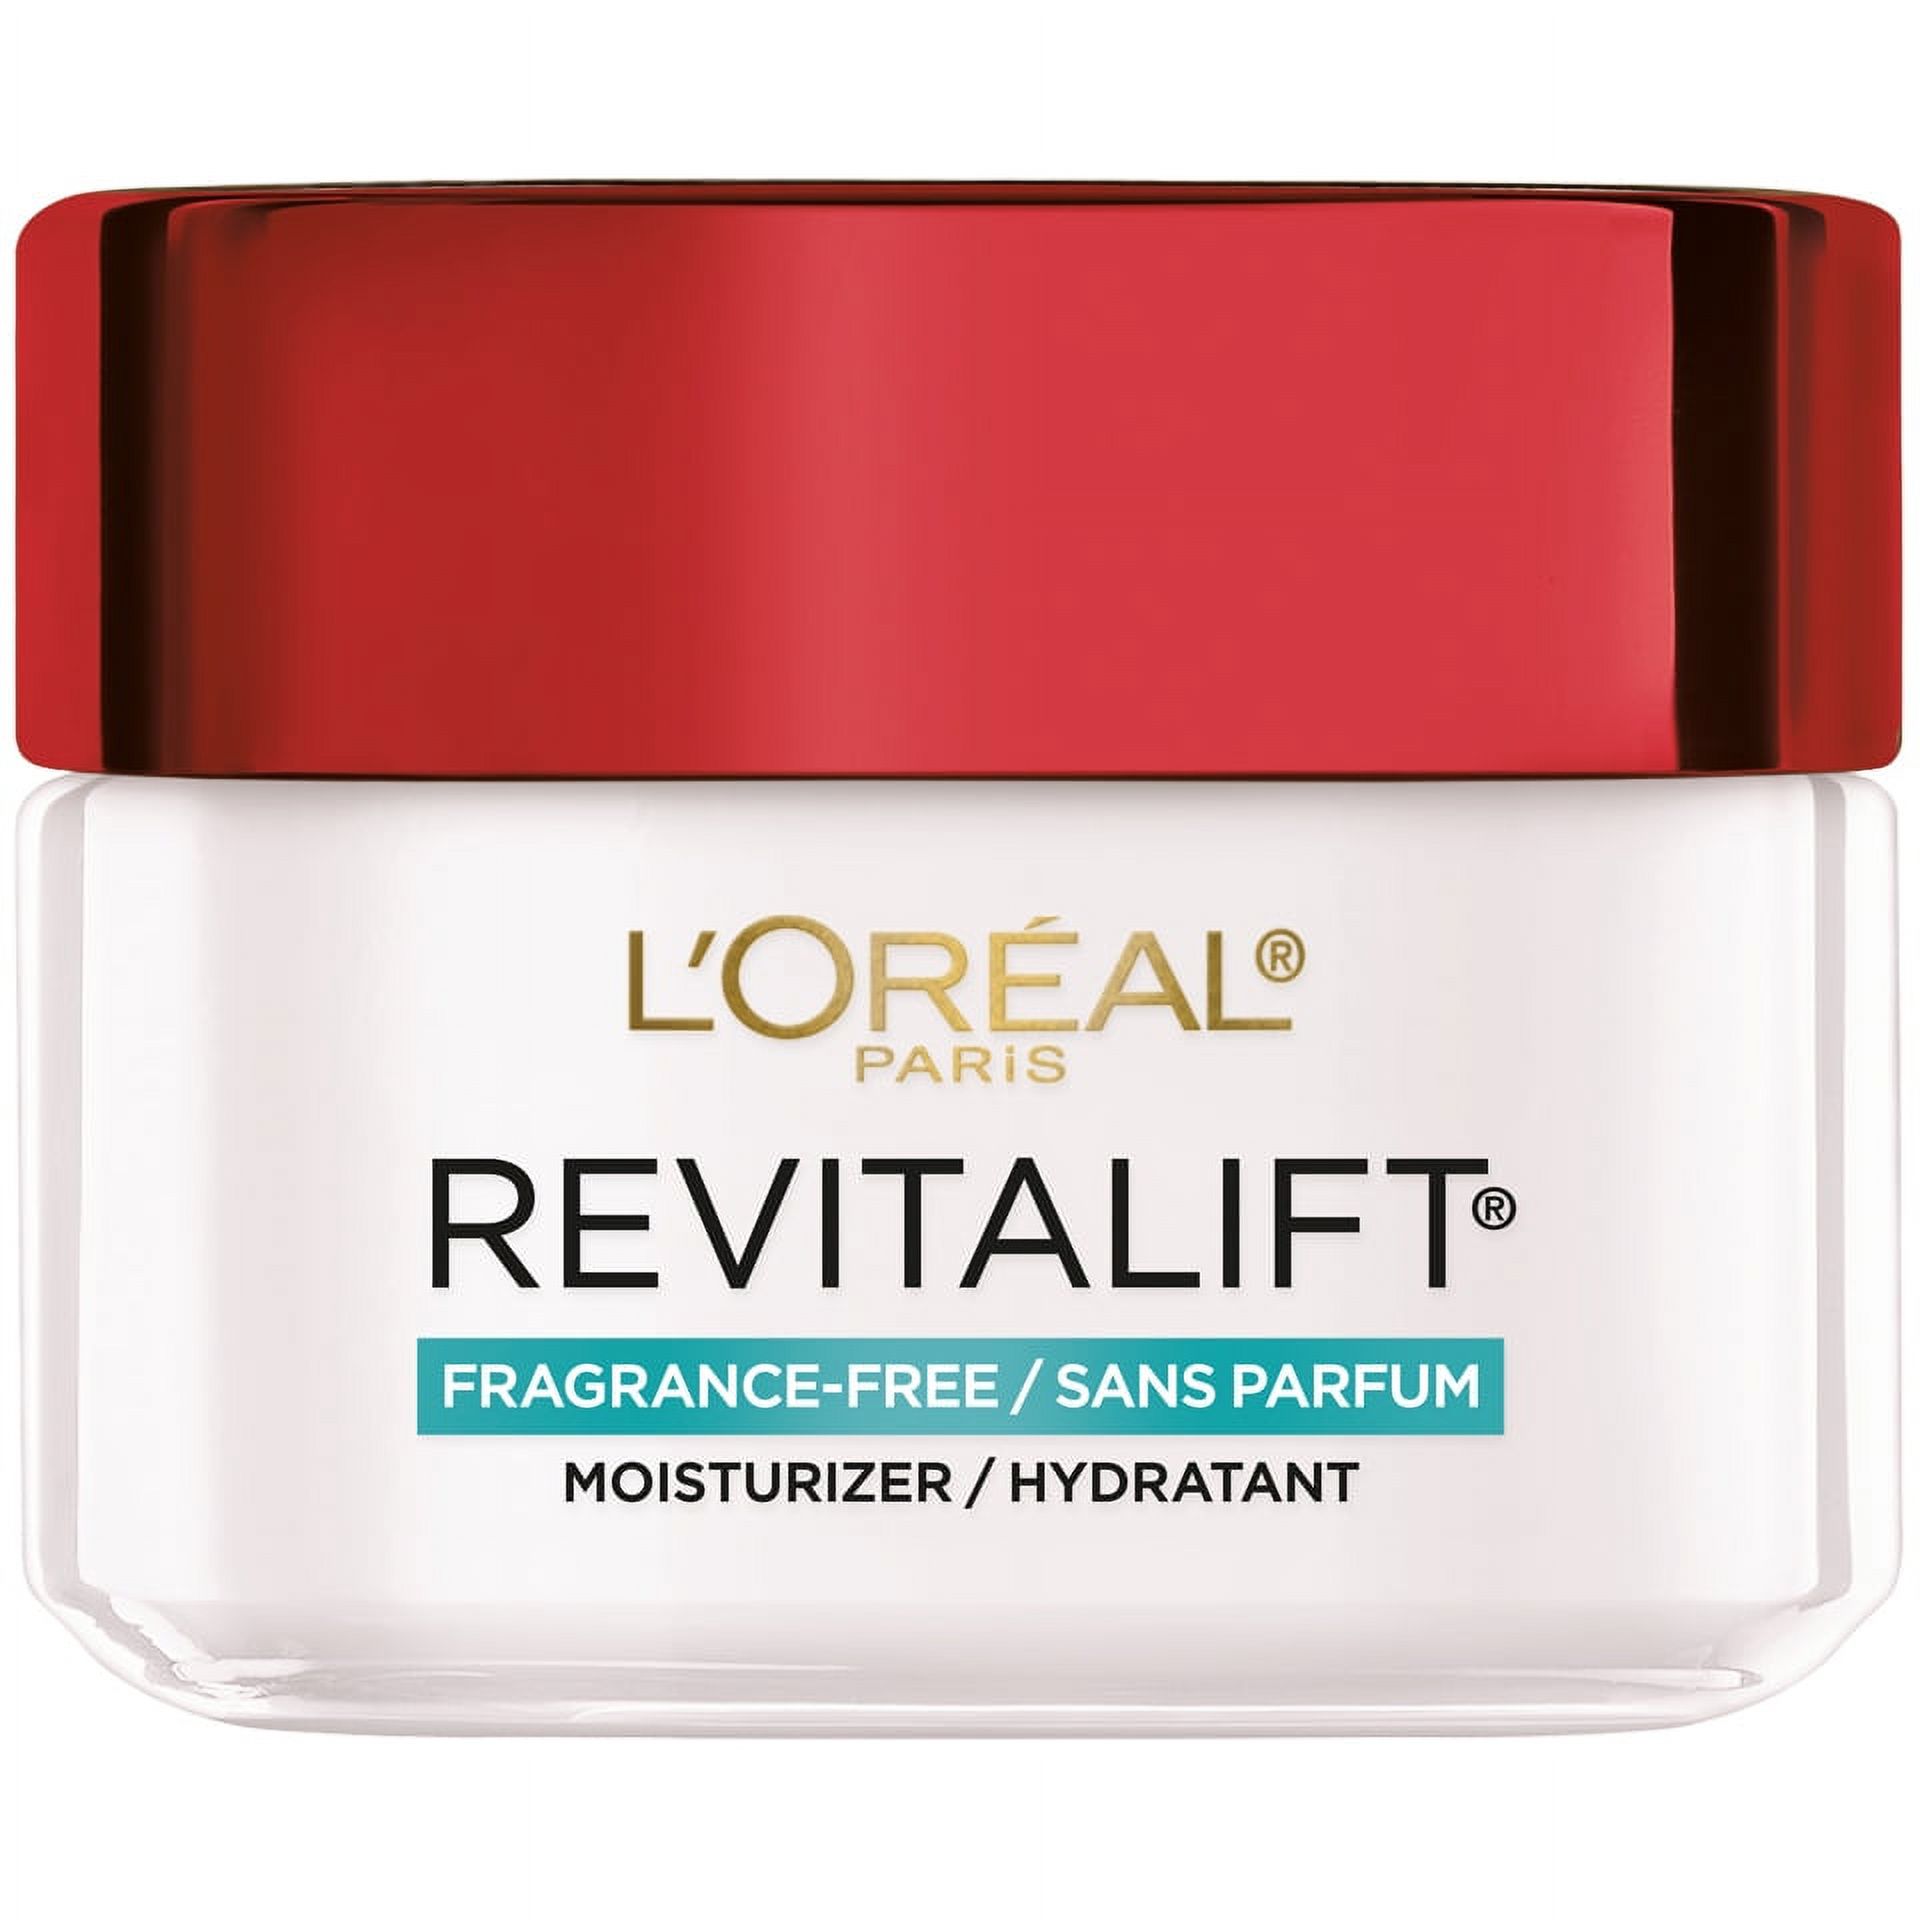 L'Oreal Paris Revitalift Anti Aging Fragrance Free Moisturizer 1.7 oz - image 1 of 8